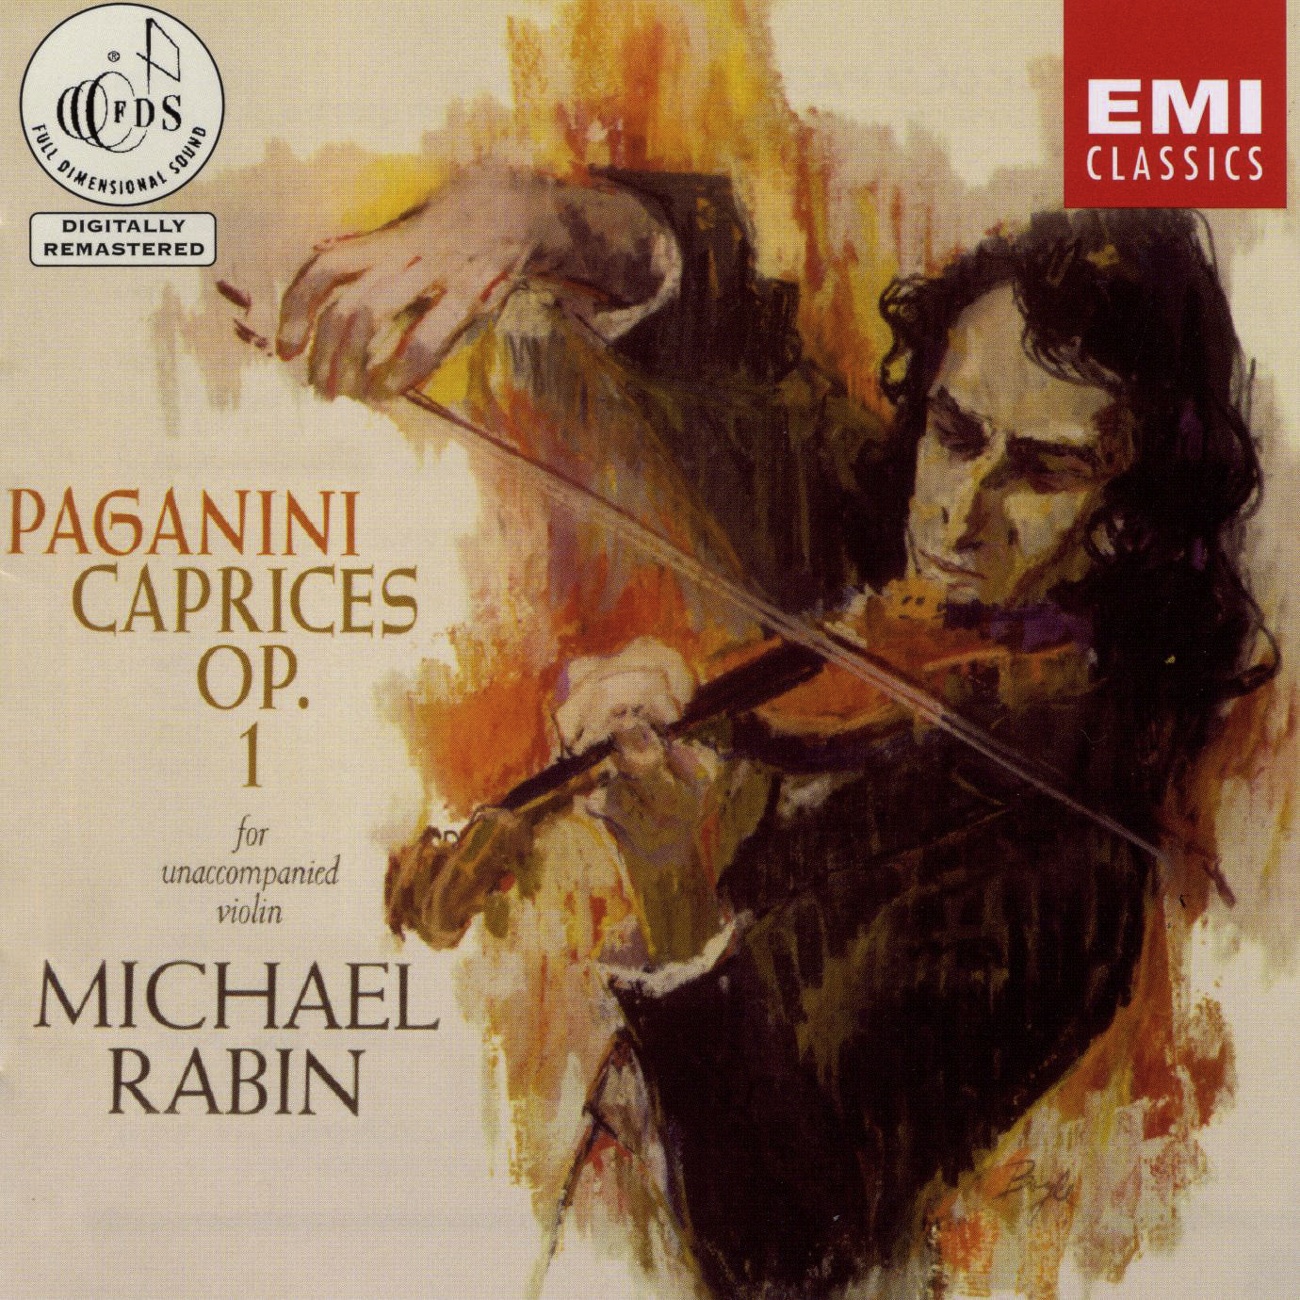 Paganini: 24 Caprices for Solo Violin, Op. 1 (2000 Digital Remaster): No. 21 in A Major - Amoroso